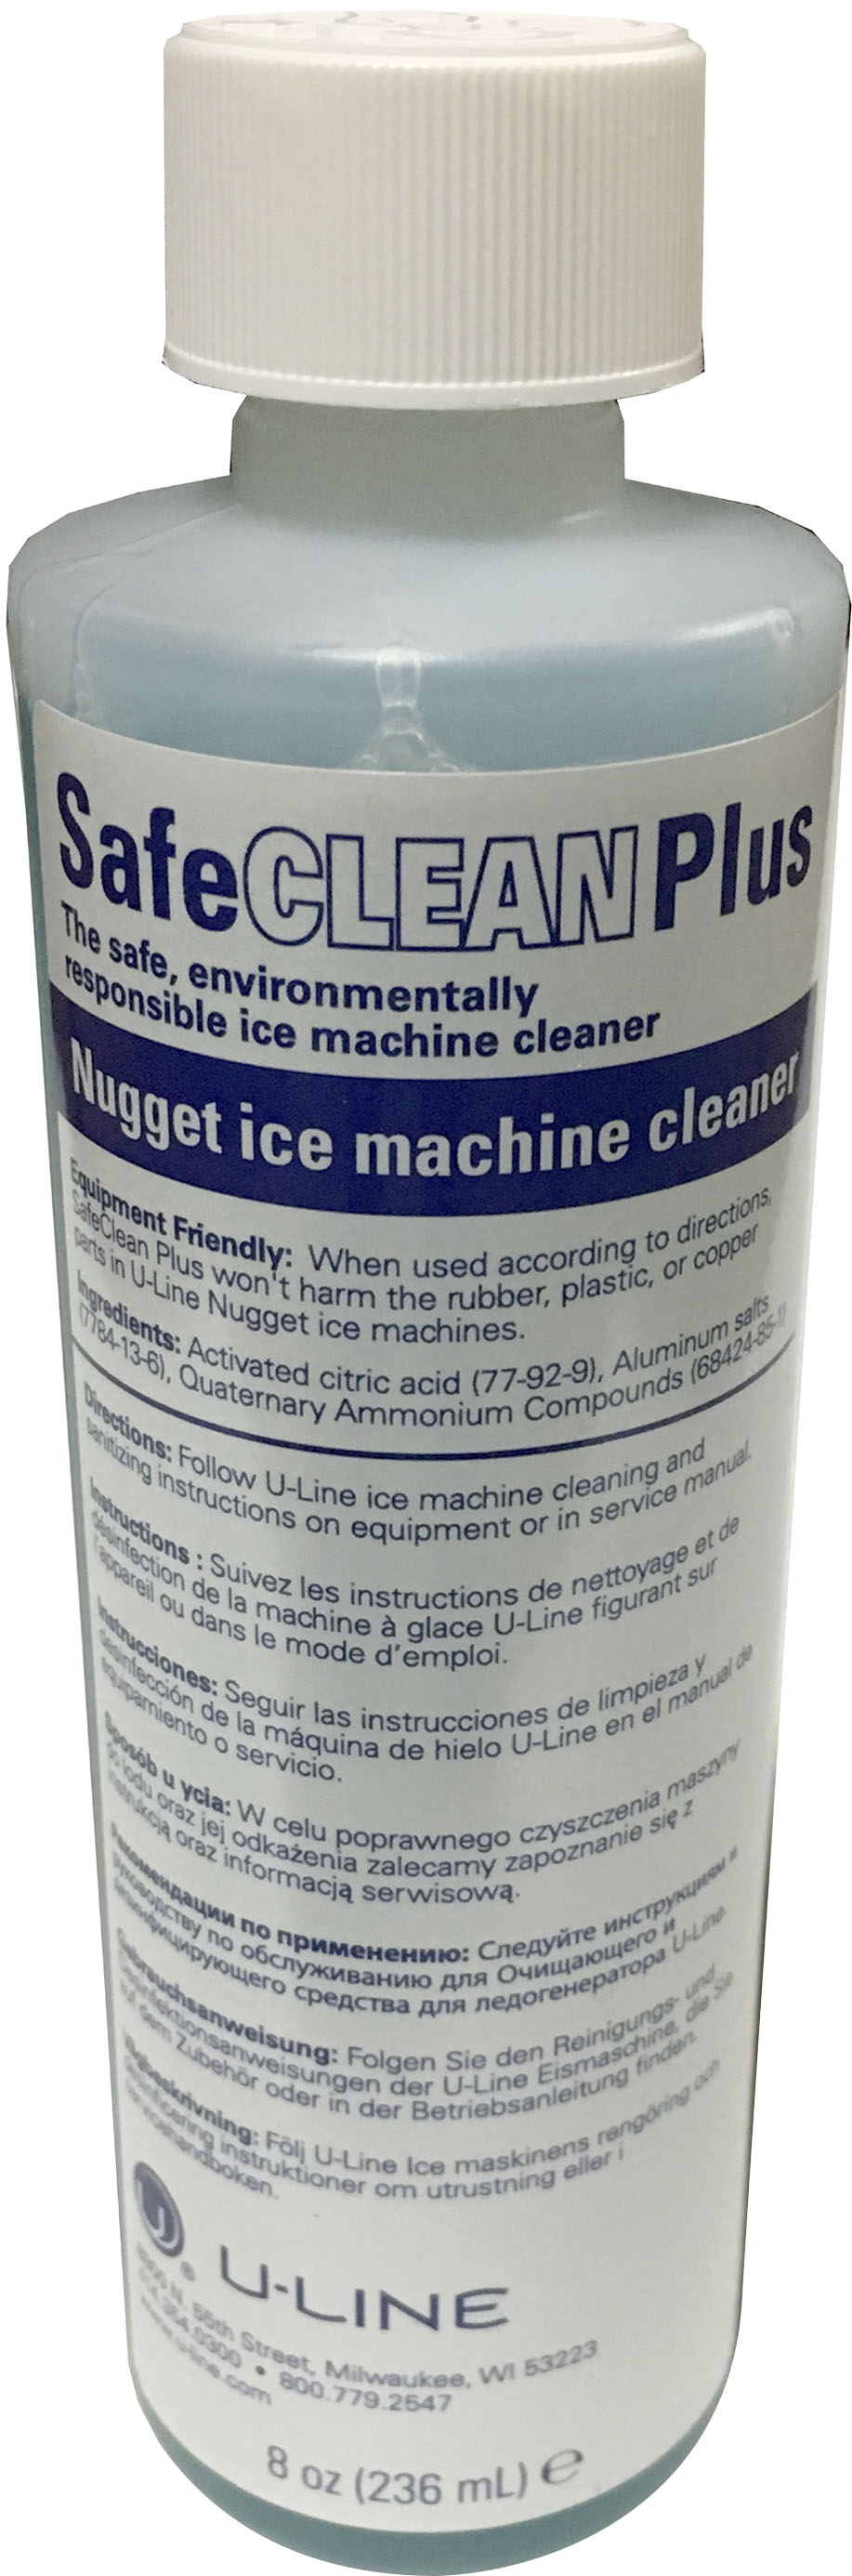 NUGGET ICE MACHINE CLEANER